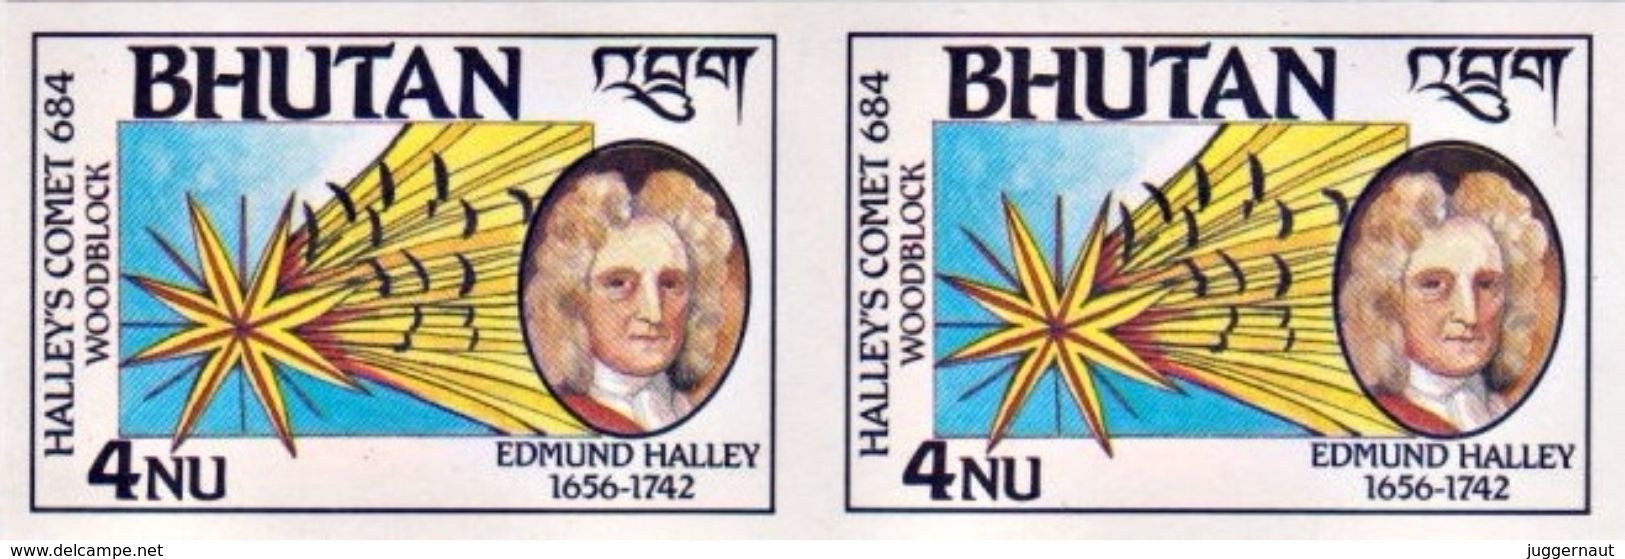 HALLEY'S COMET 4Nu MINT STAMP IMPERF PAIR BHUTAN 1986 MINT/MNH - Asie